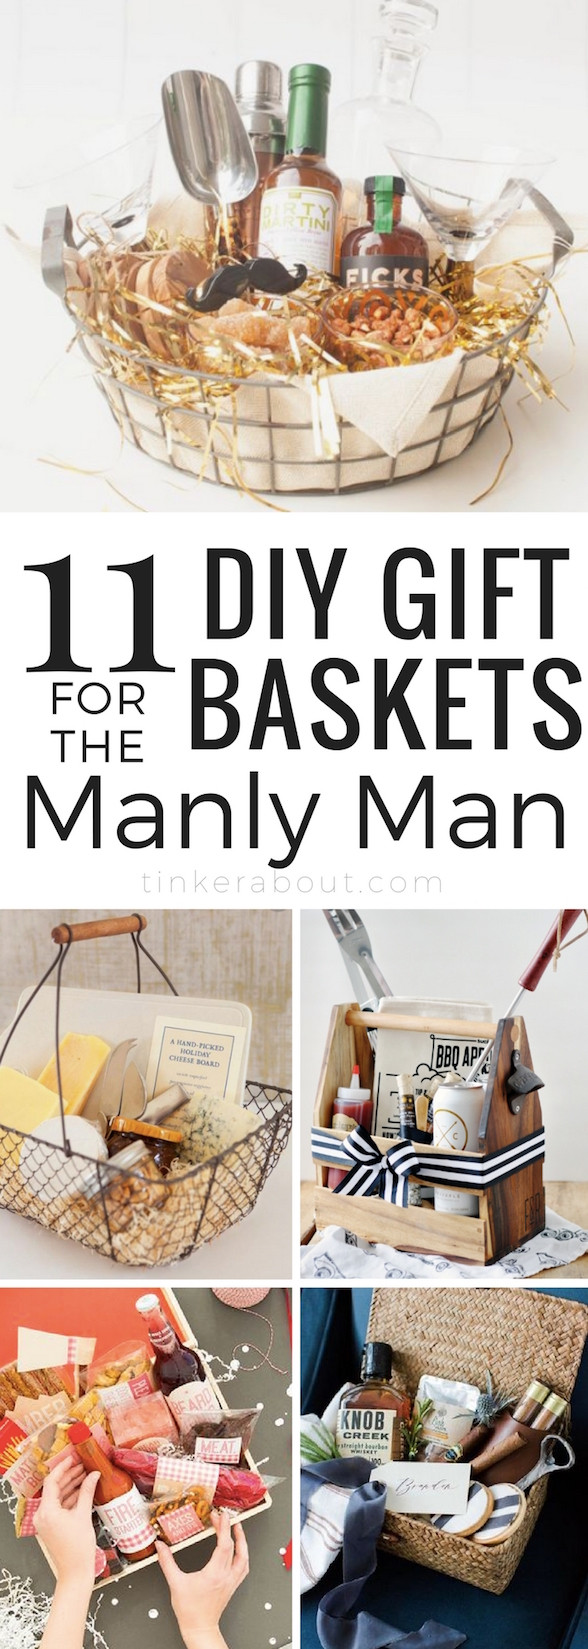 Gift Basket Ideas Man
 11 Best Gift Basket Ideas For Him